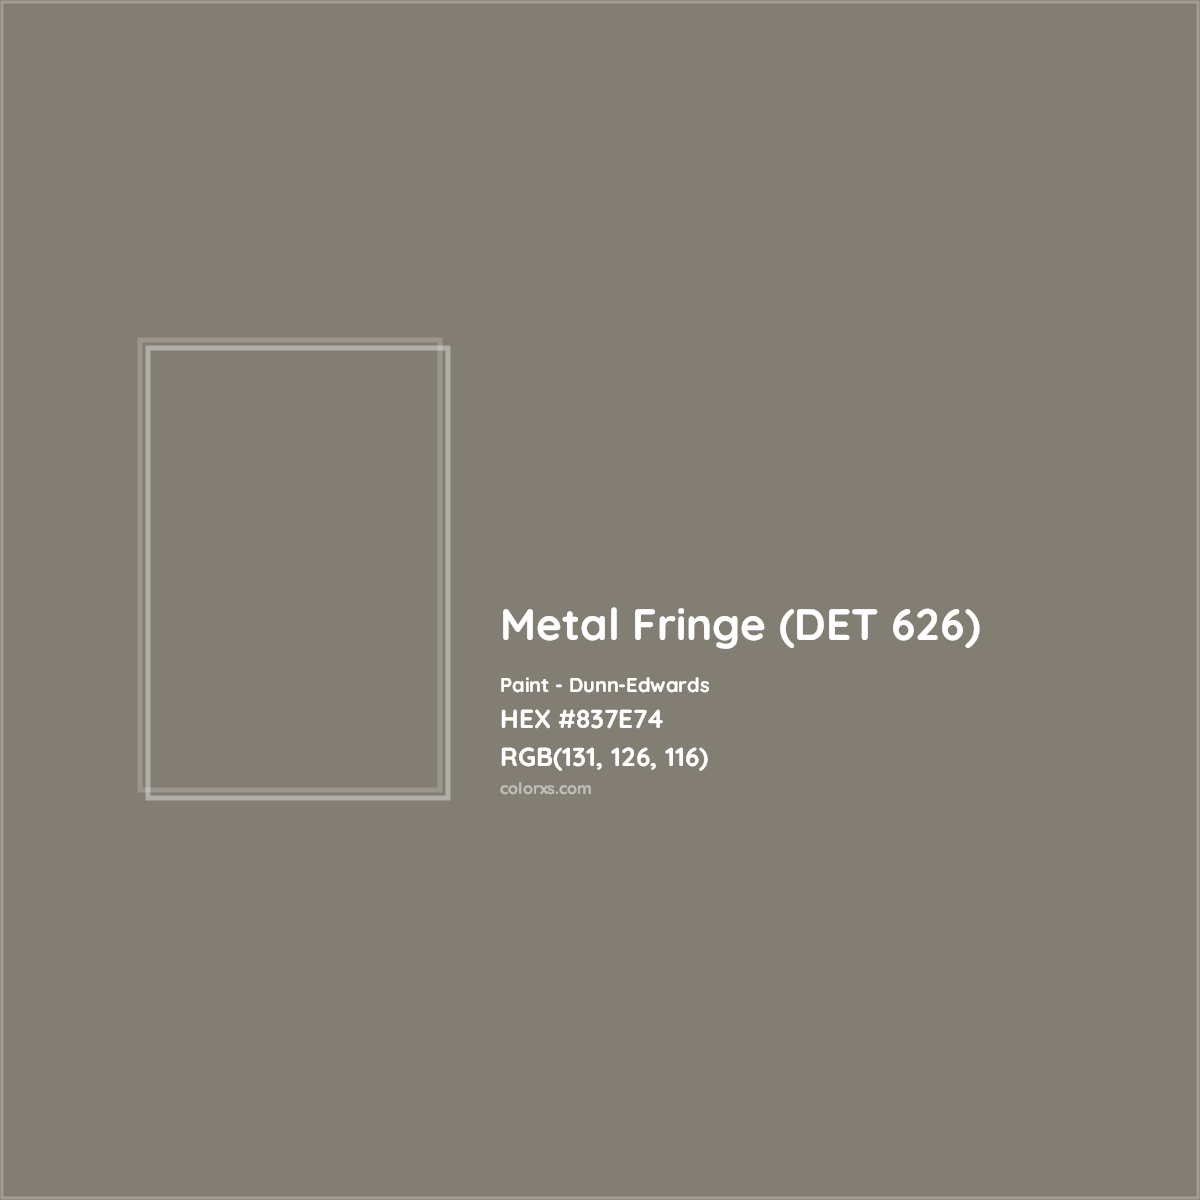 HEX #837E74 Metal Fringe (DET 626) Paint Dunn-Edwards - Color Code